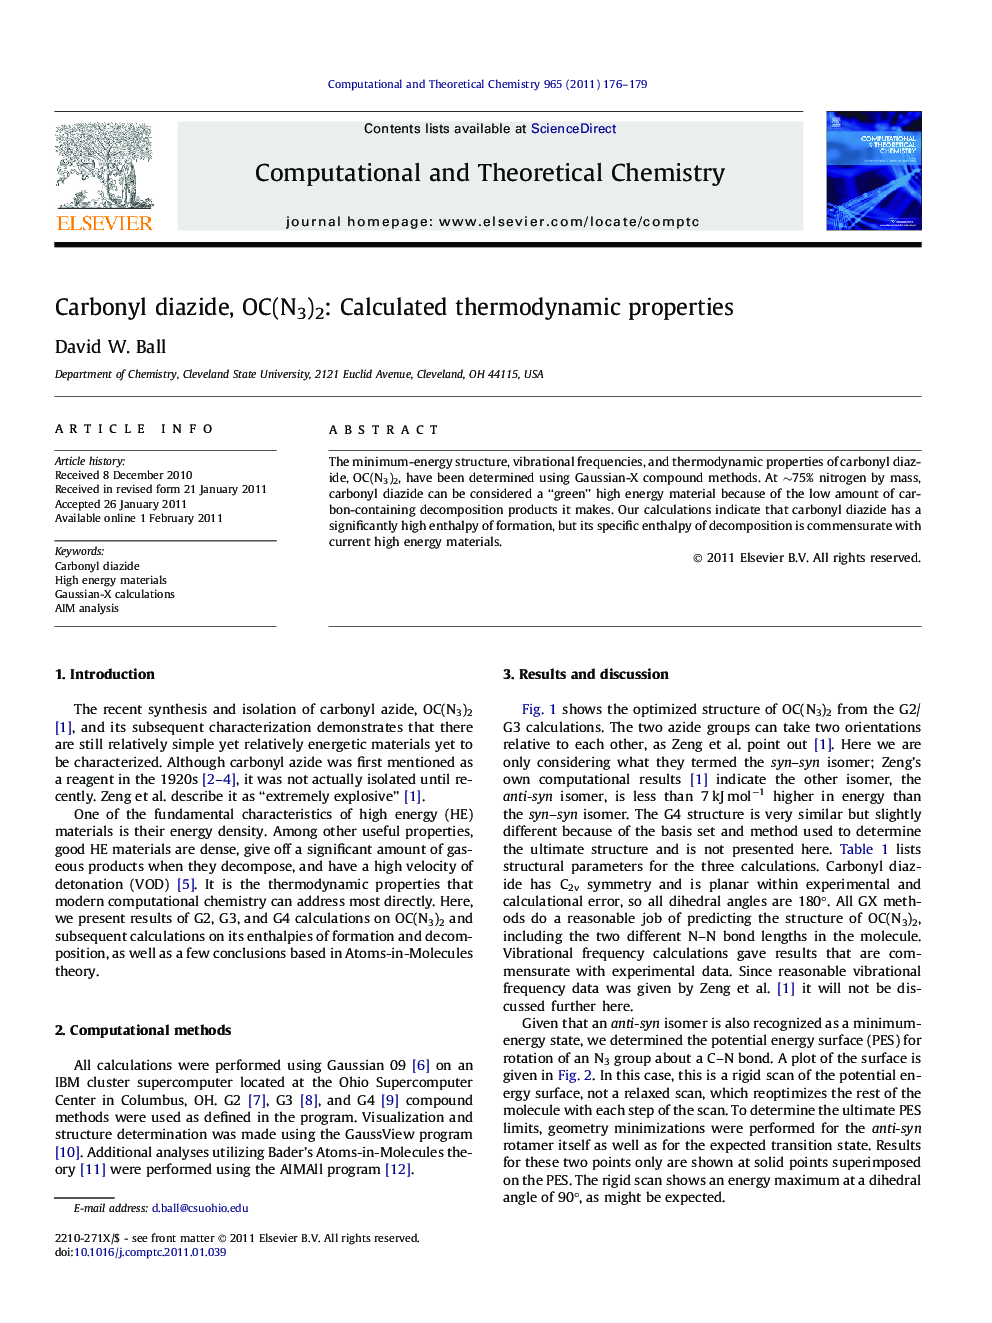 Carbonyl diazide, OC(N3)2: Calculated thermodynamic properties